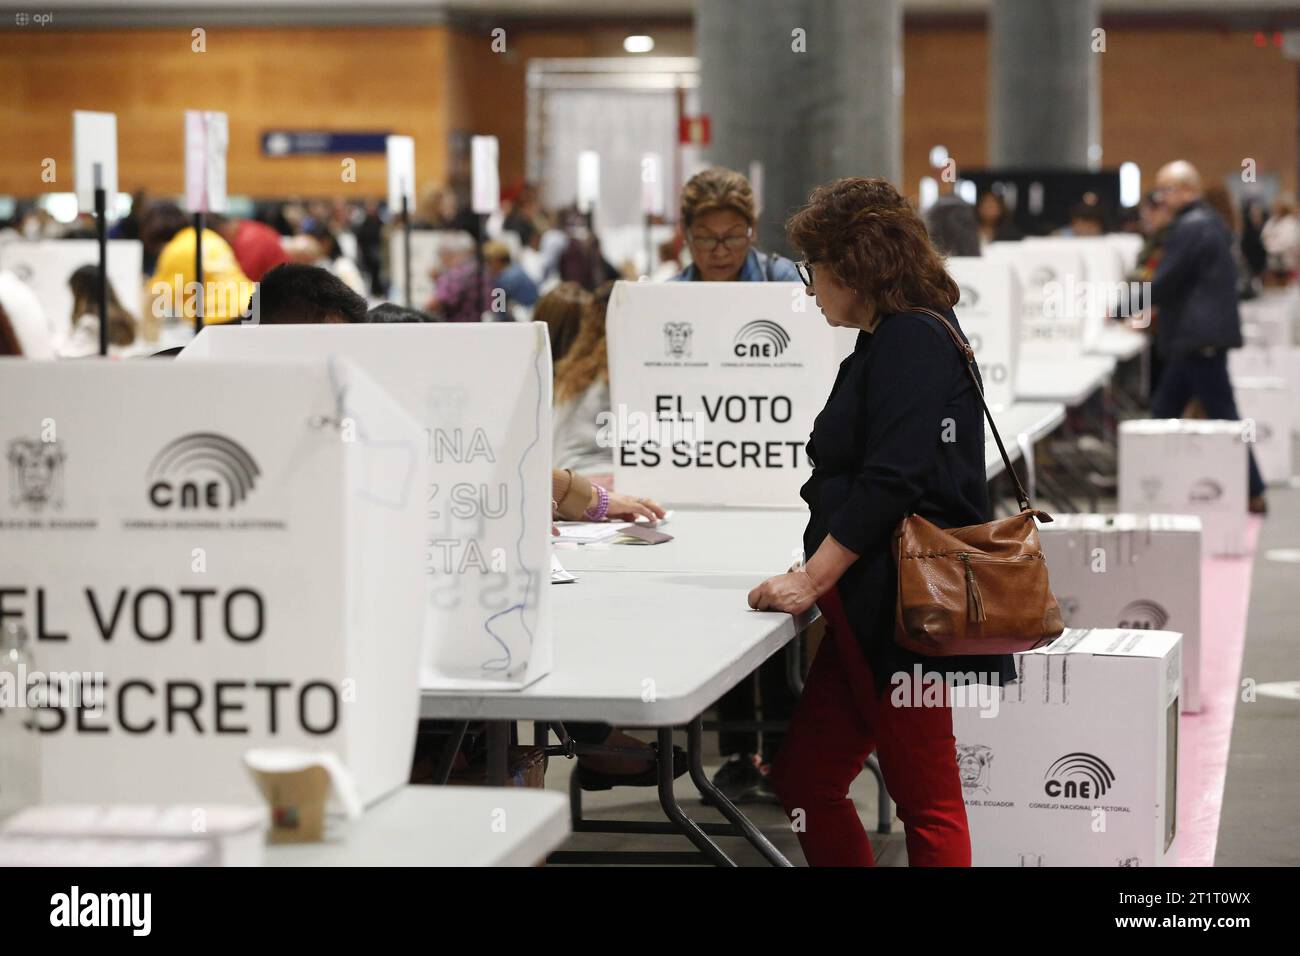 ELECCIONES - ECUATORIANOS - ESPANA Miles de ecuatorianos ejercen su derecho al voto en Madrid Espana durante la segunda vuelta para las elecciones generales de Ecuador. POL-ELECCIONES-ECUATORIANOS-ESPAÃA-448d4e74d594ab6cceaac53d8d36f60 *** ELEZIONI ECUADORIANE SPAGNA migliaia di ECUADORIANI esercitano il loro diritto di voto a Madrid Spagna durante il secondo turno delle elezioni generali in Ecuador POL ELEZIONI ECUADORIANE SPAGNA 448d4e74d4d4e74d594ab6ccea594a594dxardx36xe53d8d8dxe5960 Foto Stock